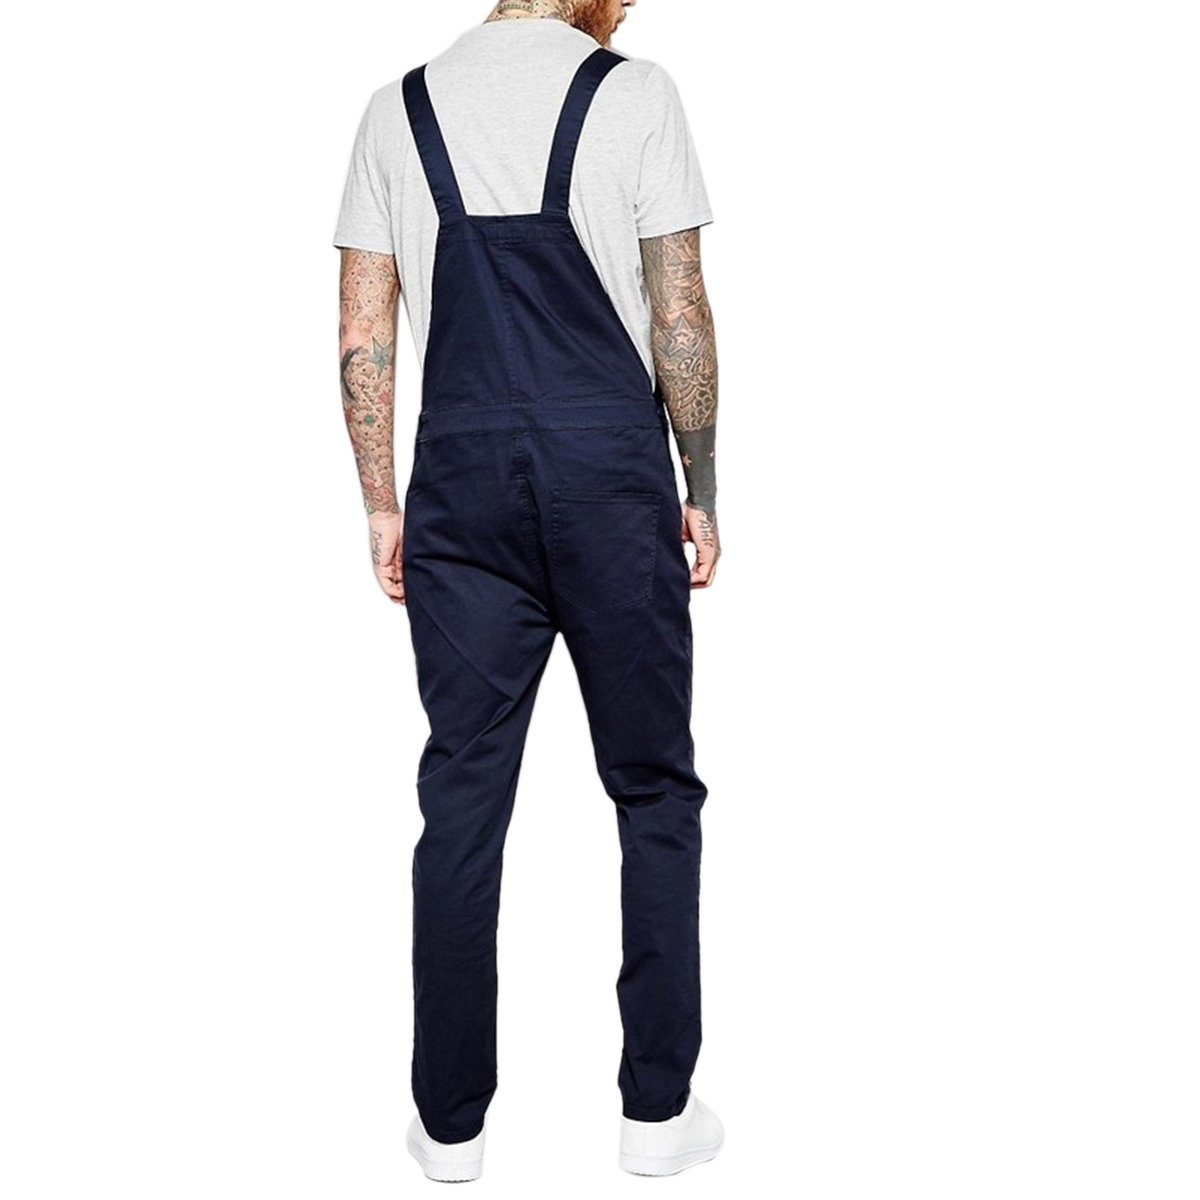 Bmnmsl Men Pants Bib Overalls Solid Color Jumpsuit Jeans Suspender Pants - image 3 of 5